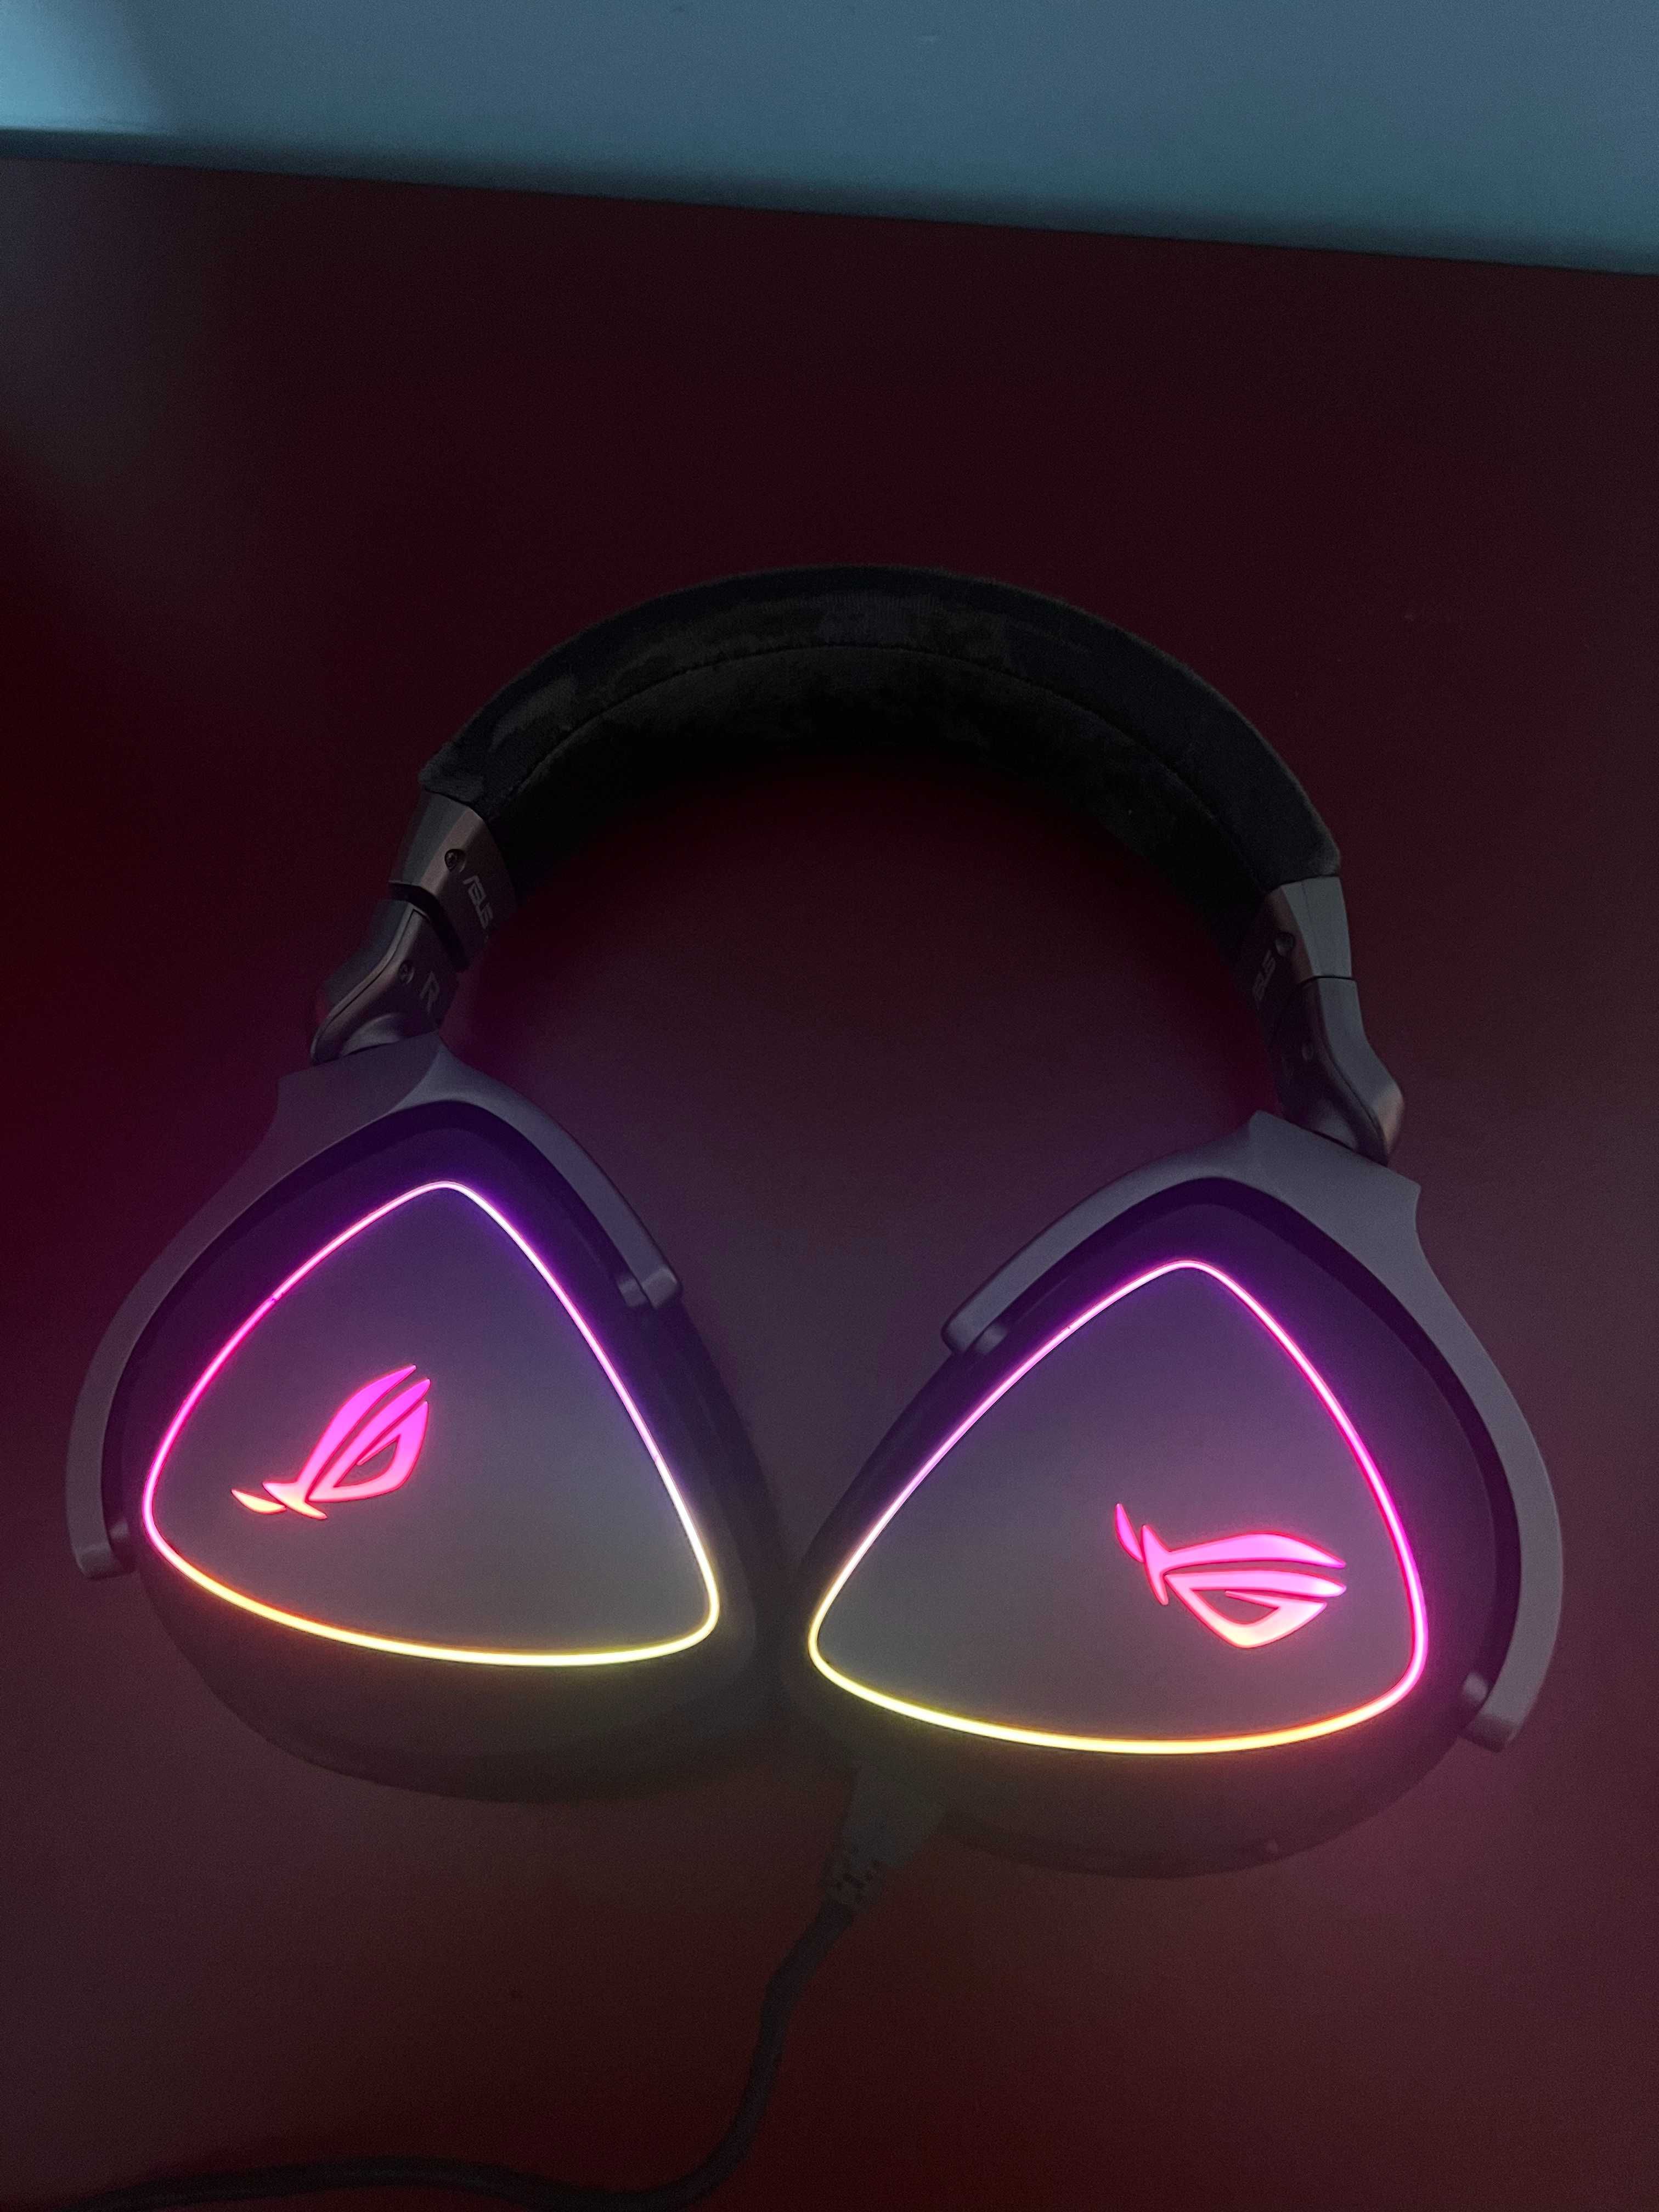 Casti ROG Delta RGB - cu iluminare personalizabila, sunet excelent!